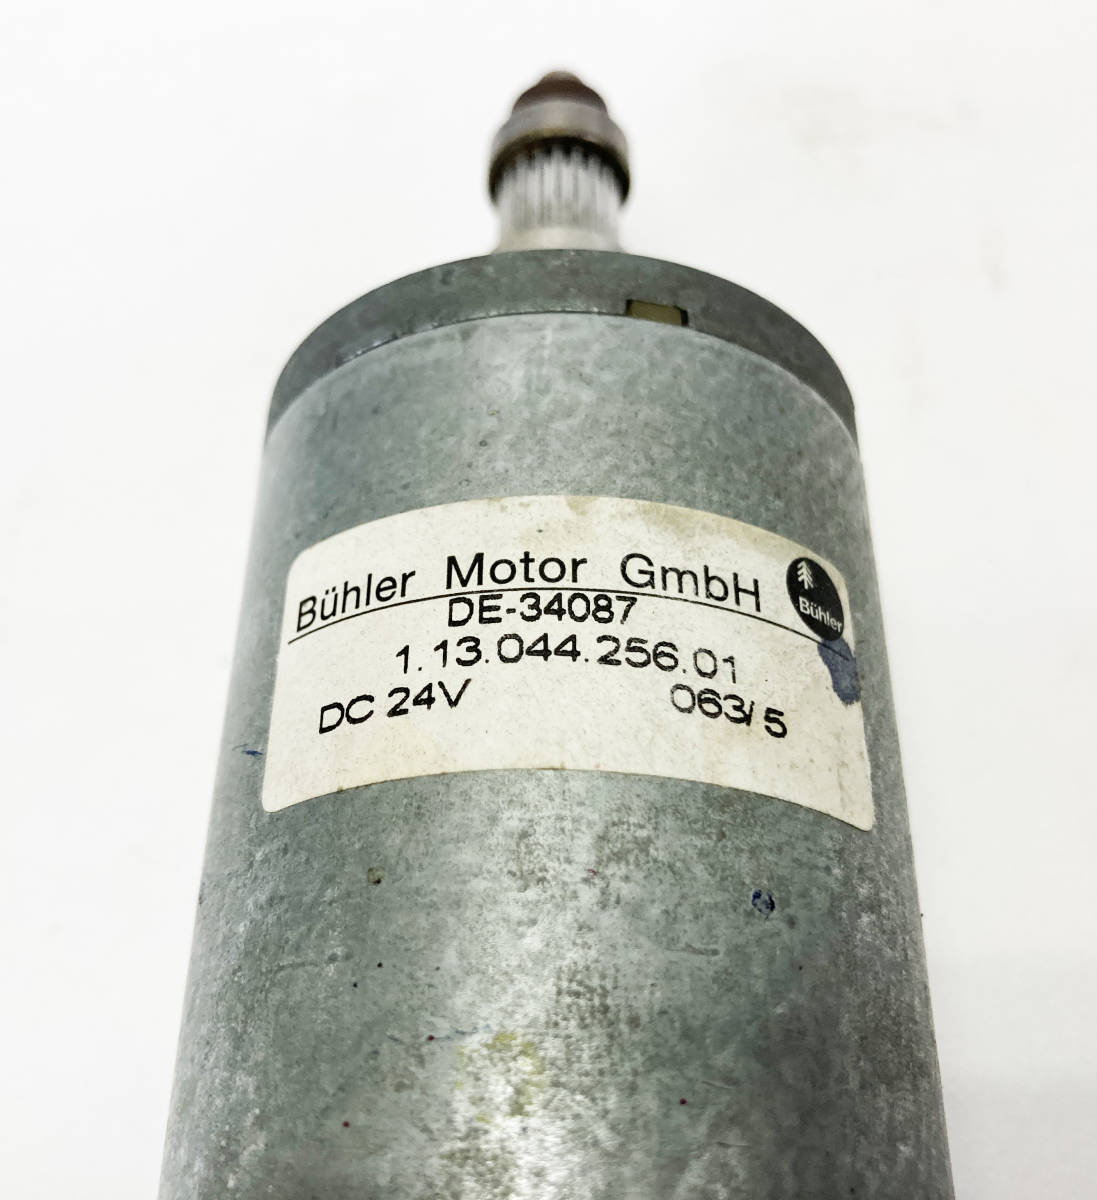 Bhler Motor GmbH ビューラーモーター DE-34087 1.13.044.256.01 DC24V★中古品_画像3